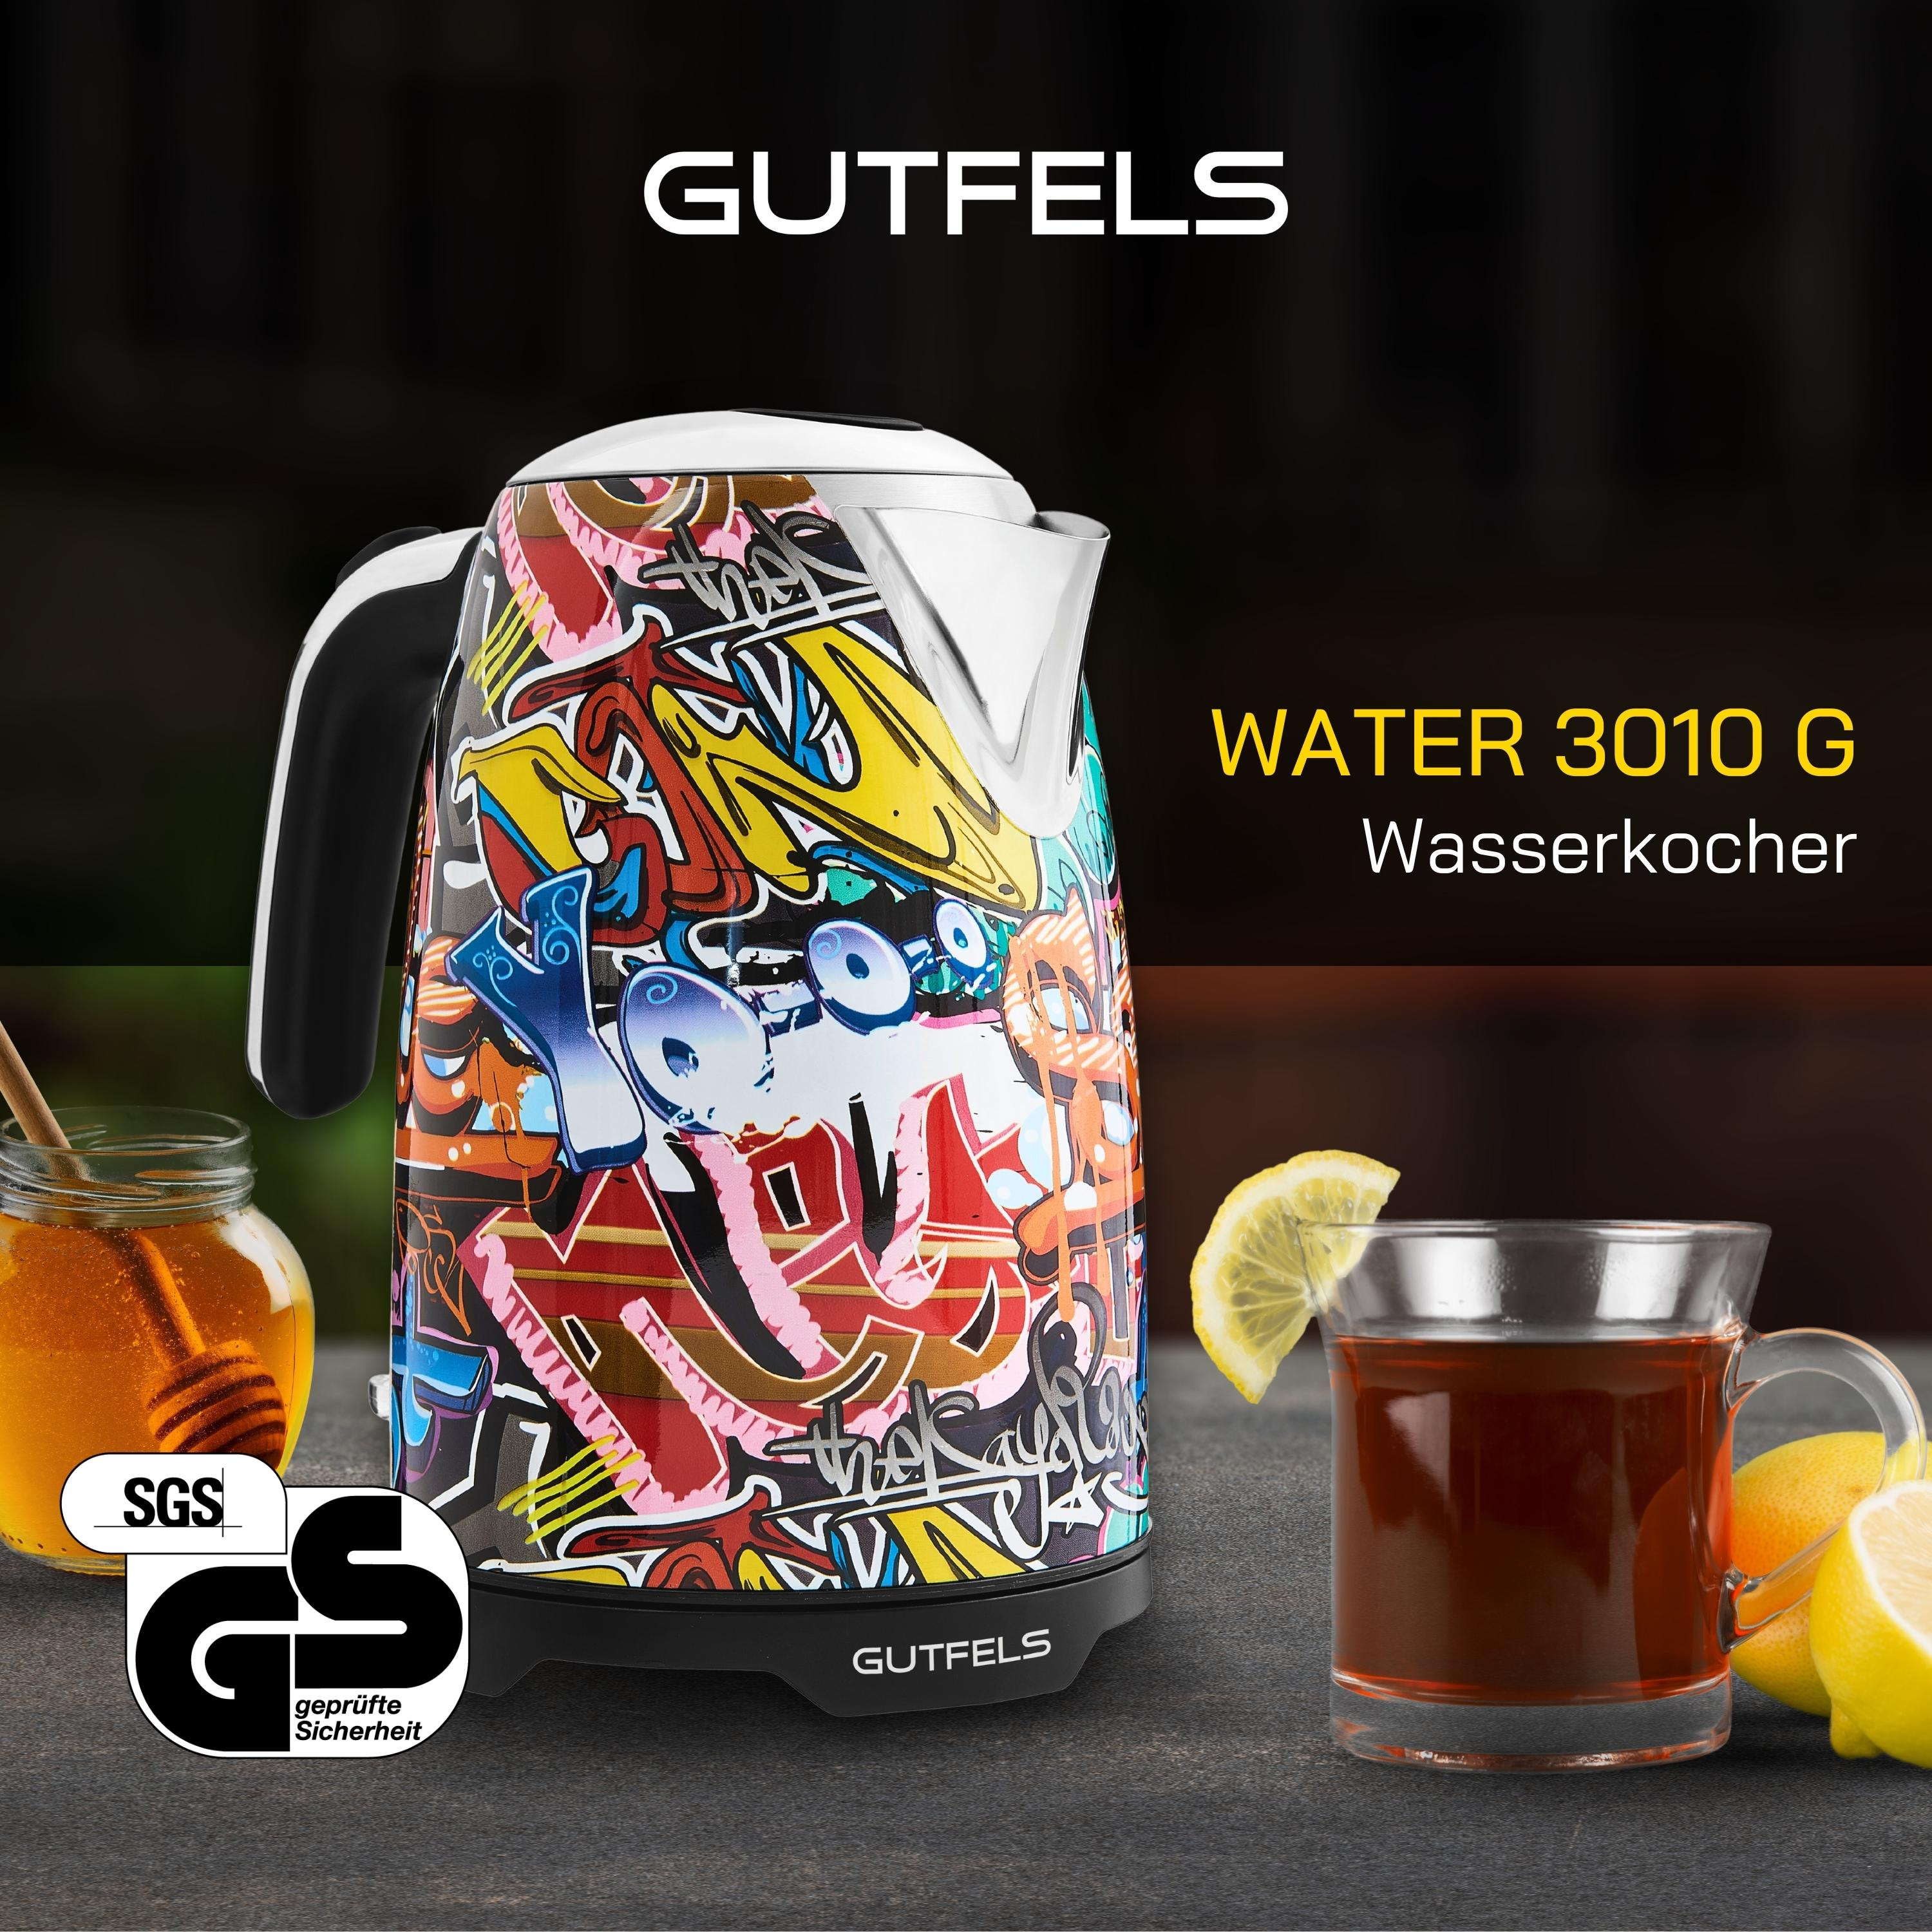 WATER 3010 GUTFELS Wasserkocher, G Bunt